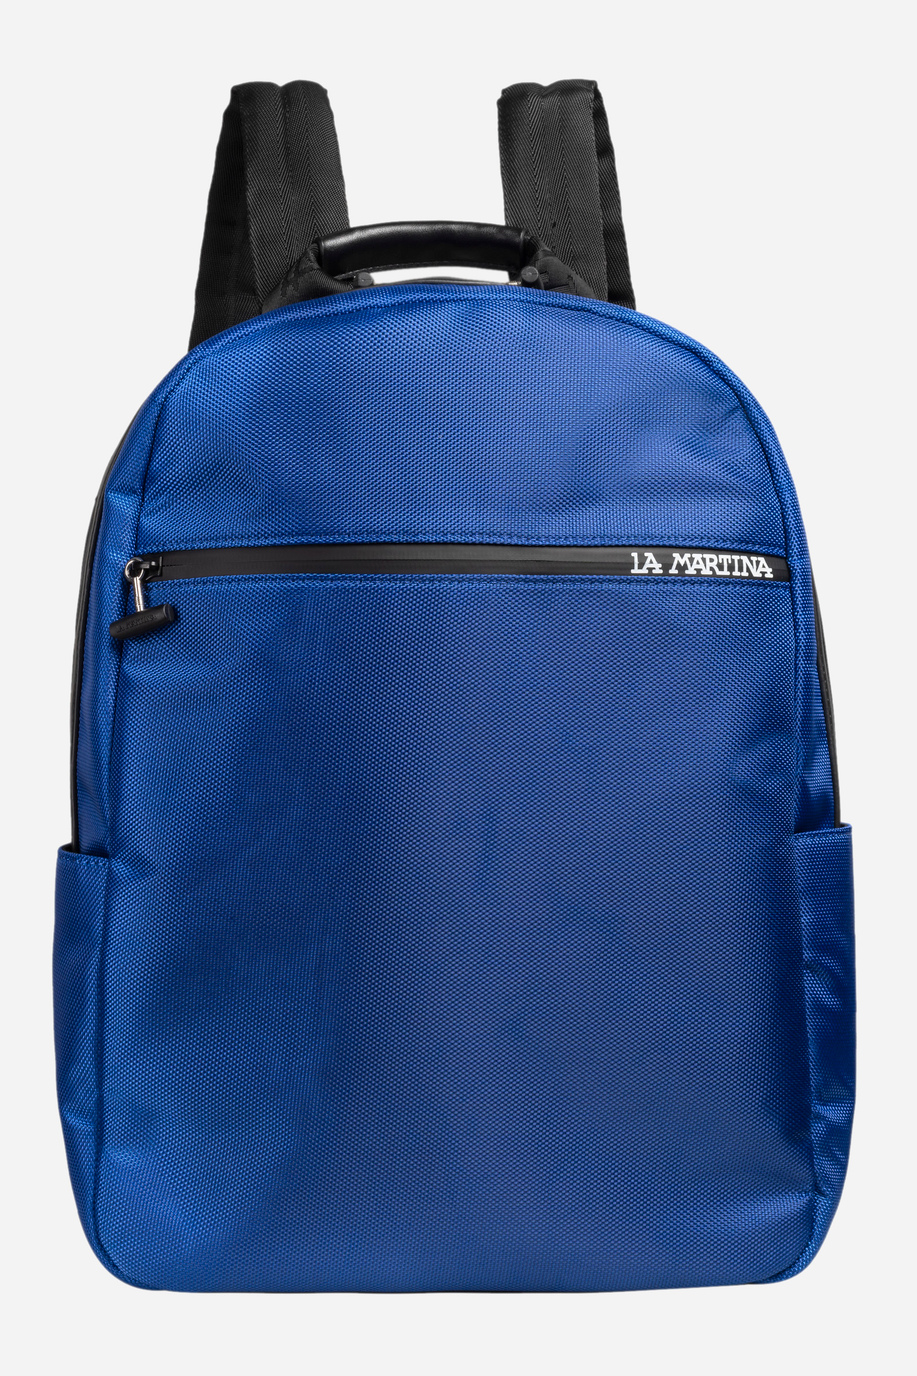 Men's backpack in synthetic material - Daniel - Backpacks | La Martina - Official Online Shop